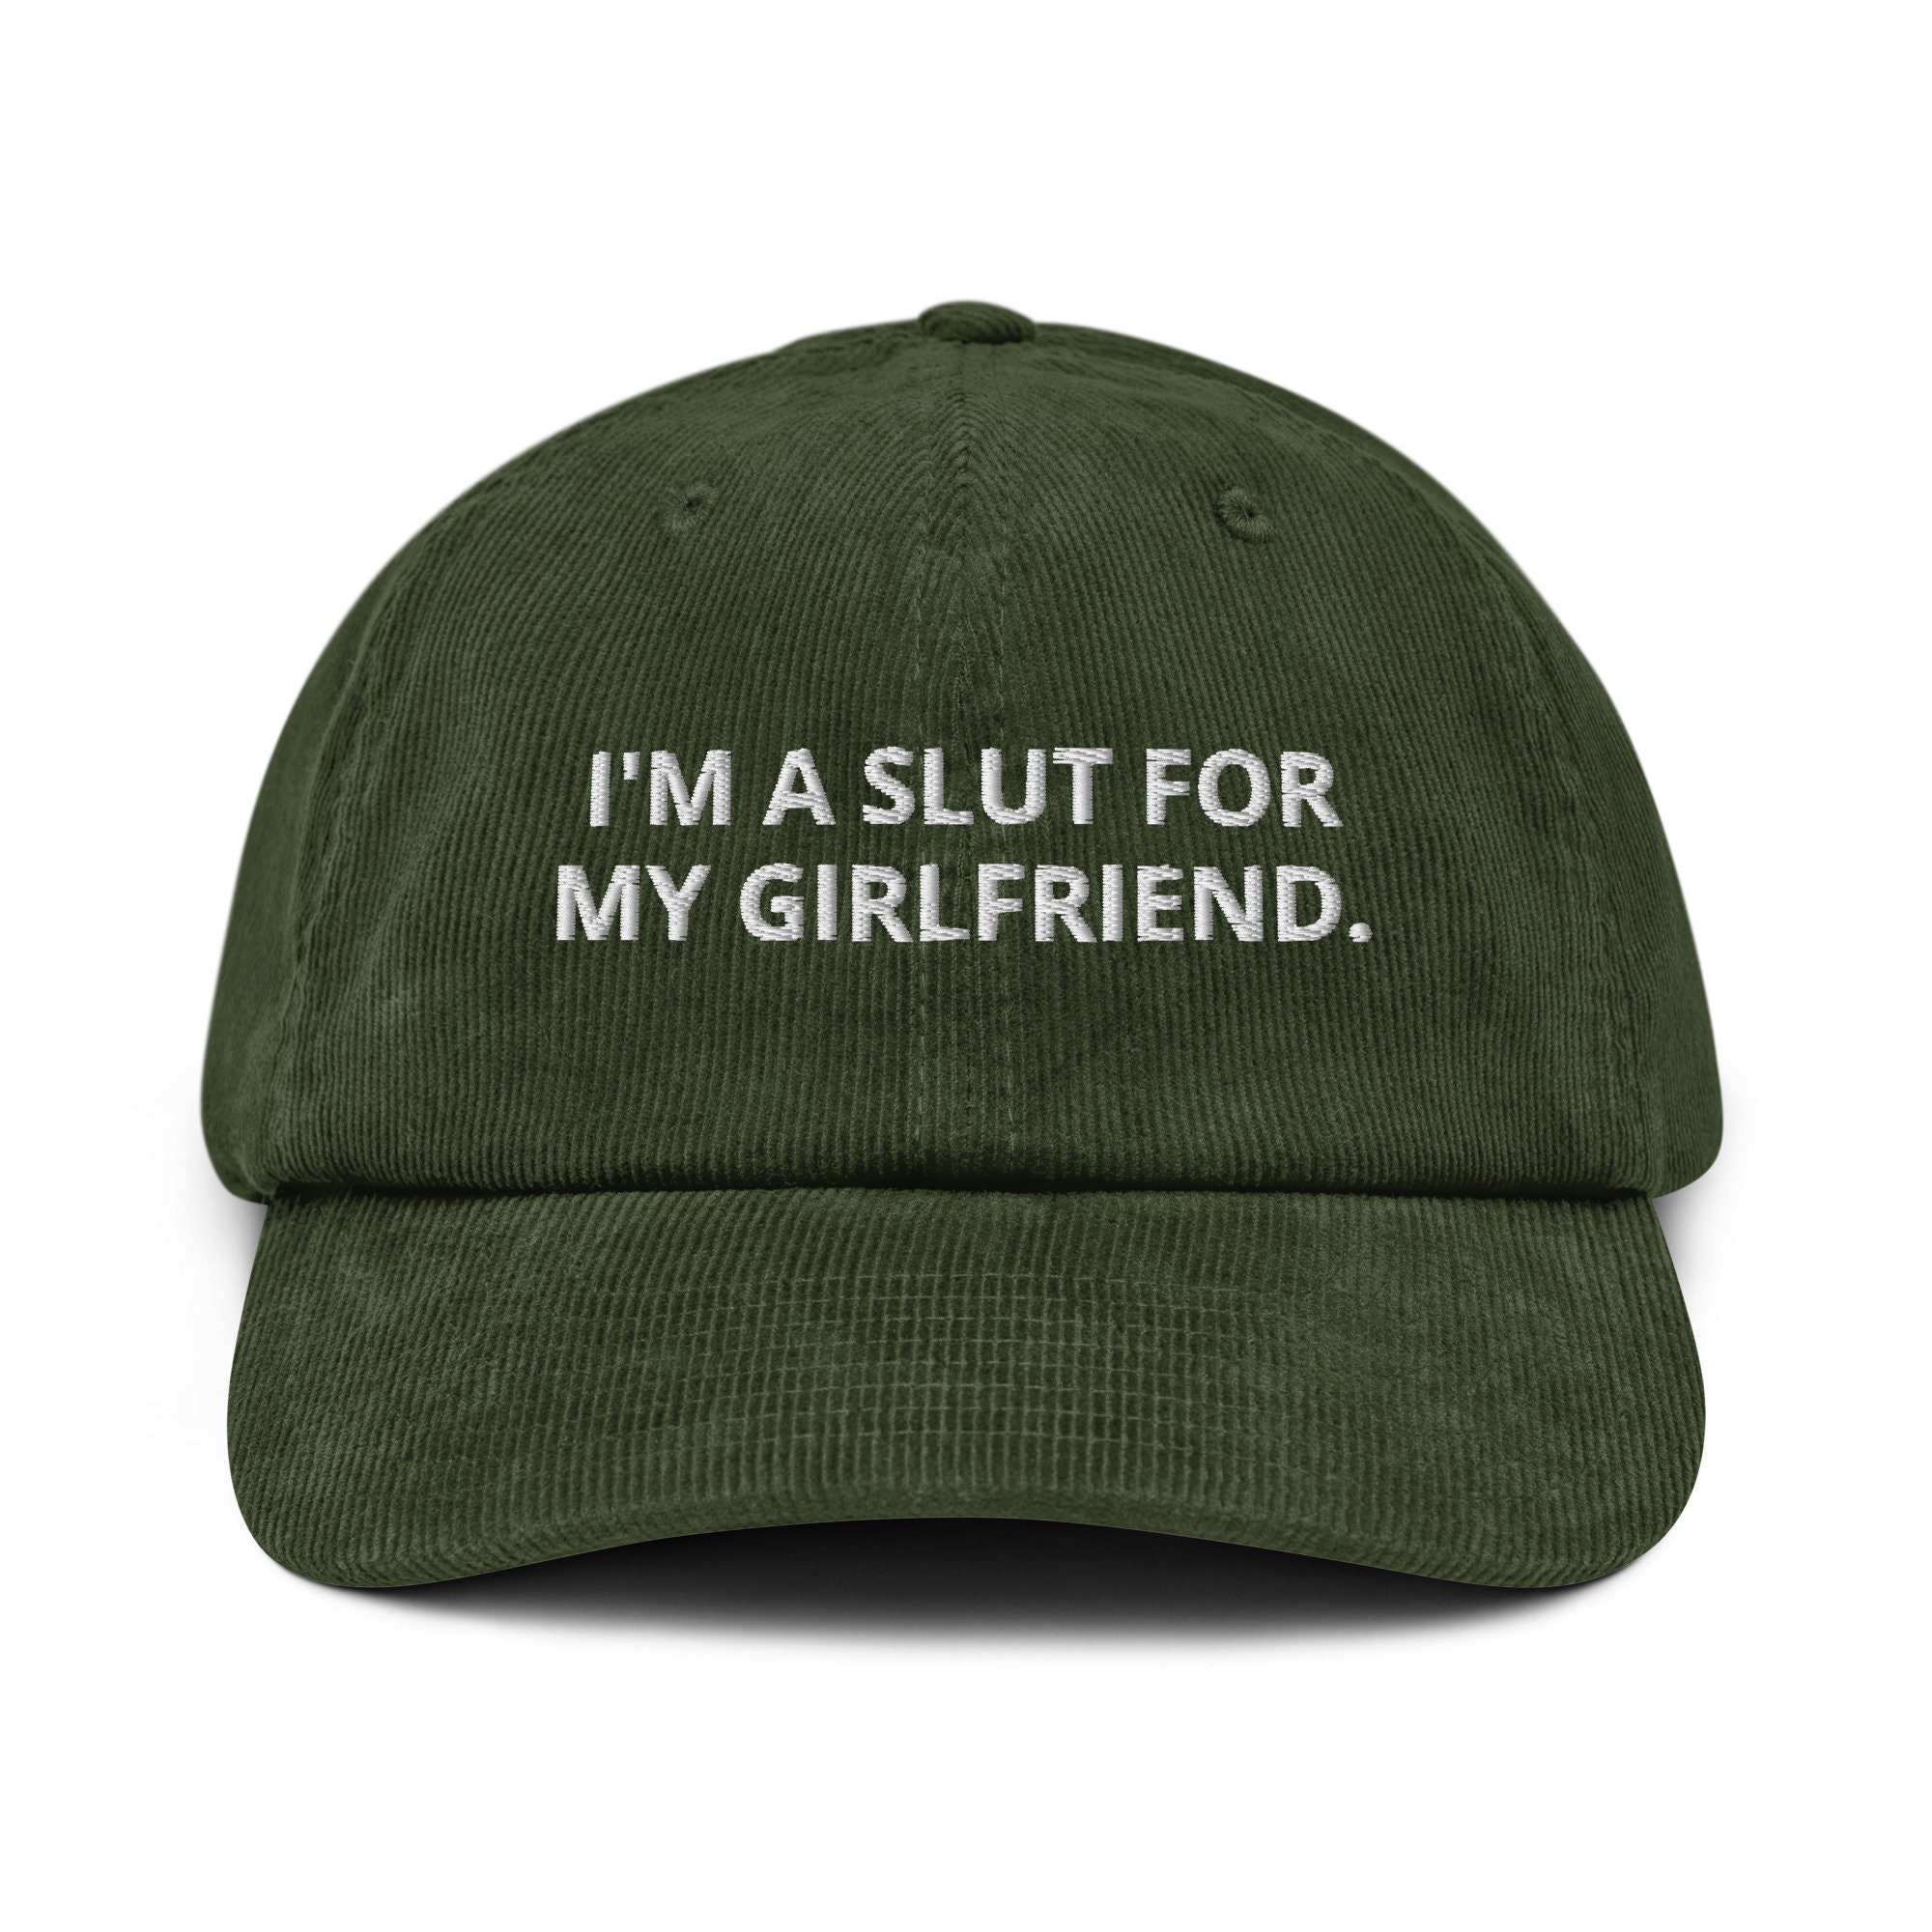 Slut Girlfriend image